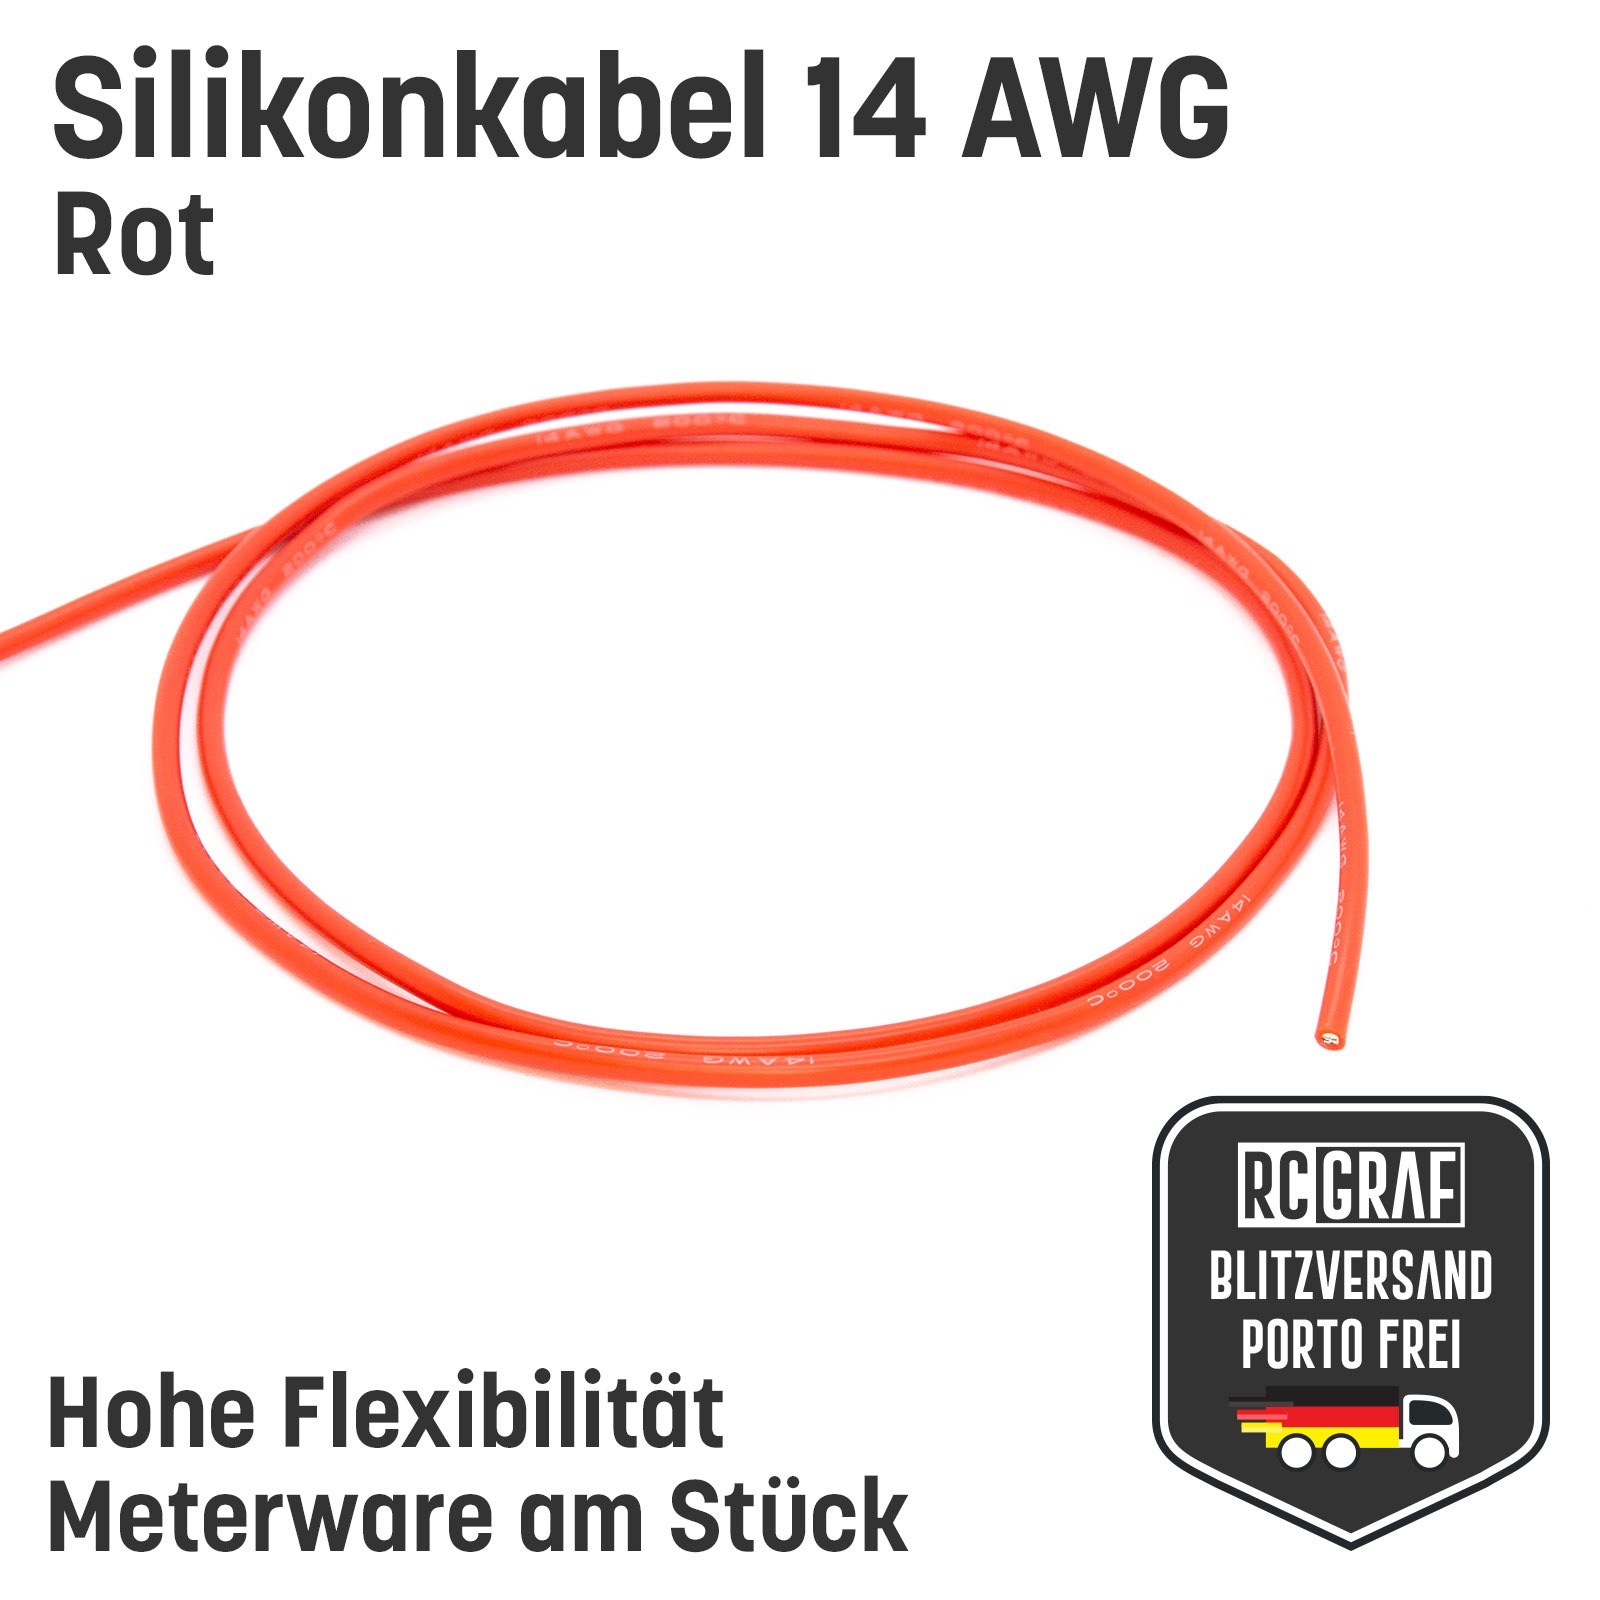 Silikonkabel 14 AWG hochflexibel Rot Schwarz Kupfer RC Kabel 3